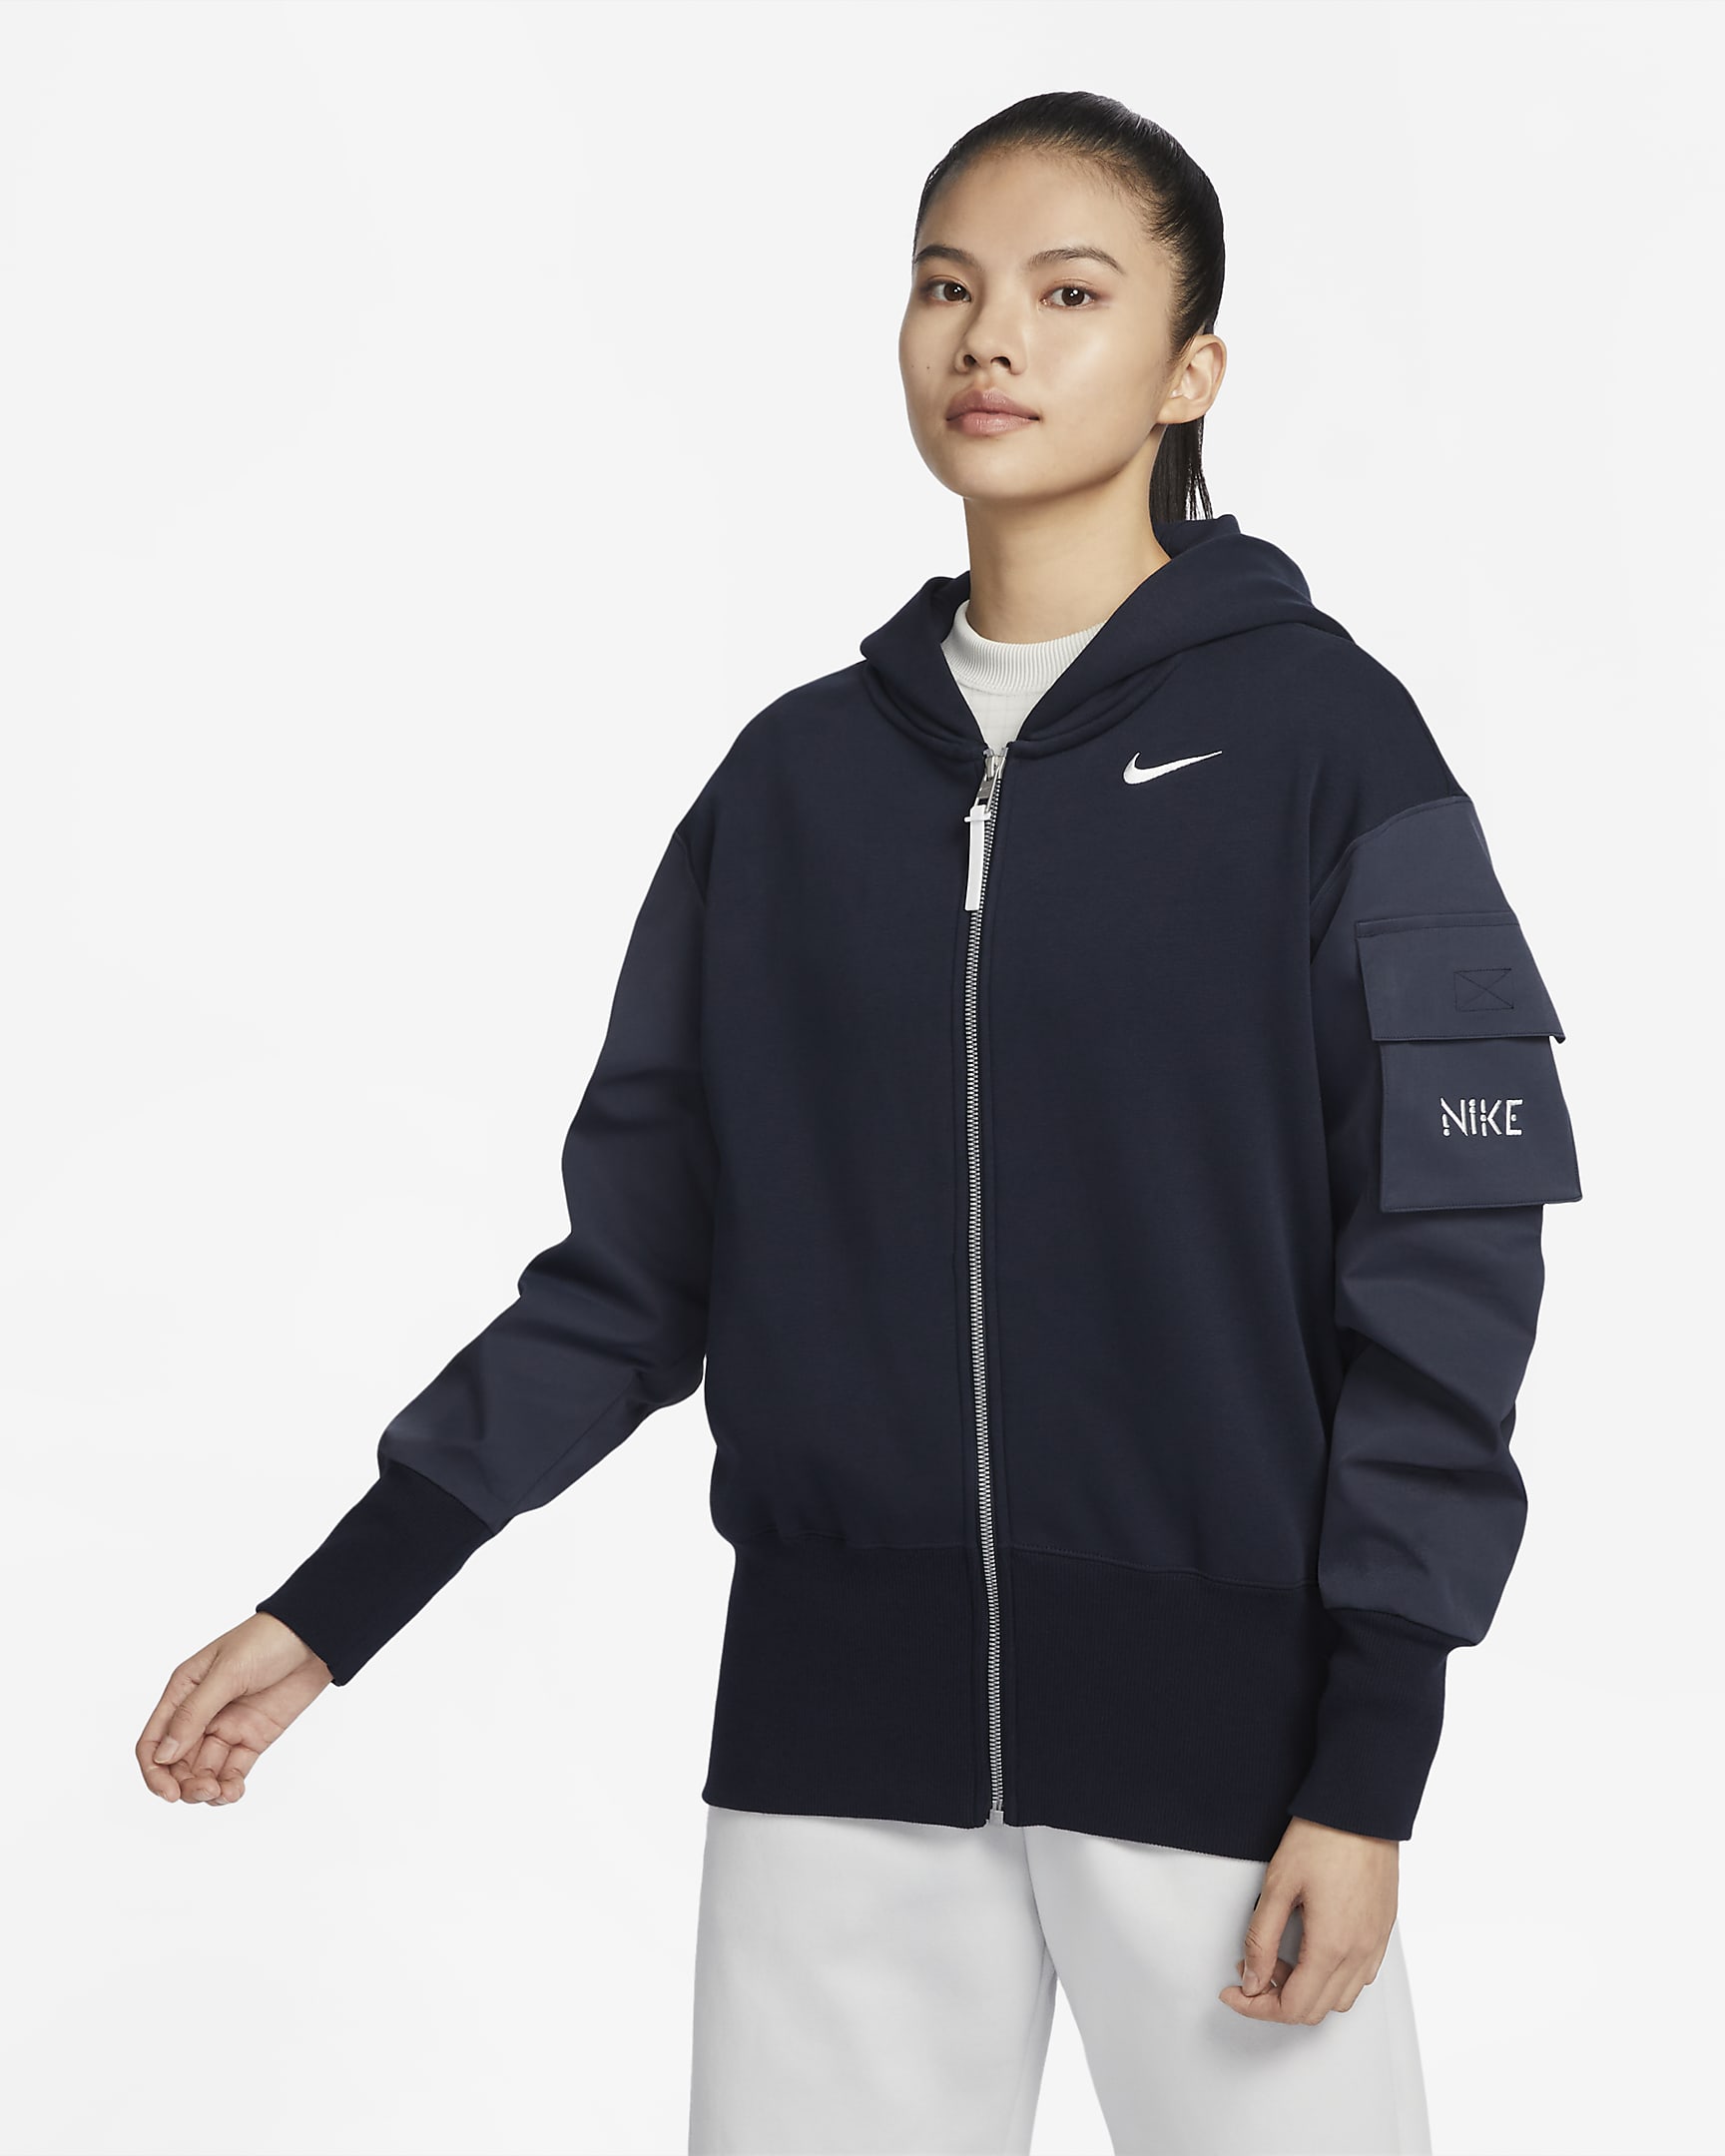 Serena Williams Design Crew Women's Full-zip Top. Nike SG